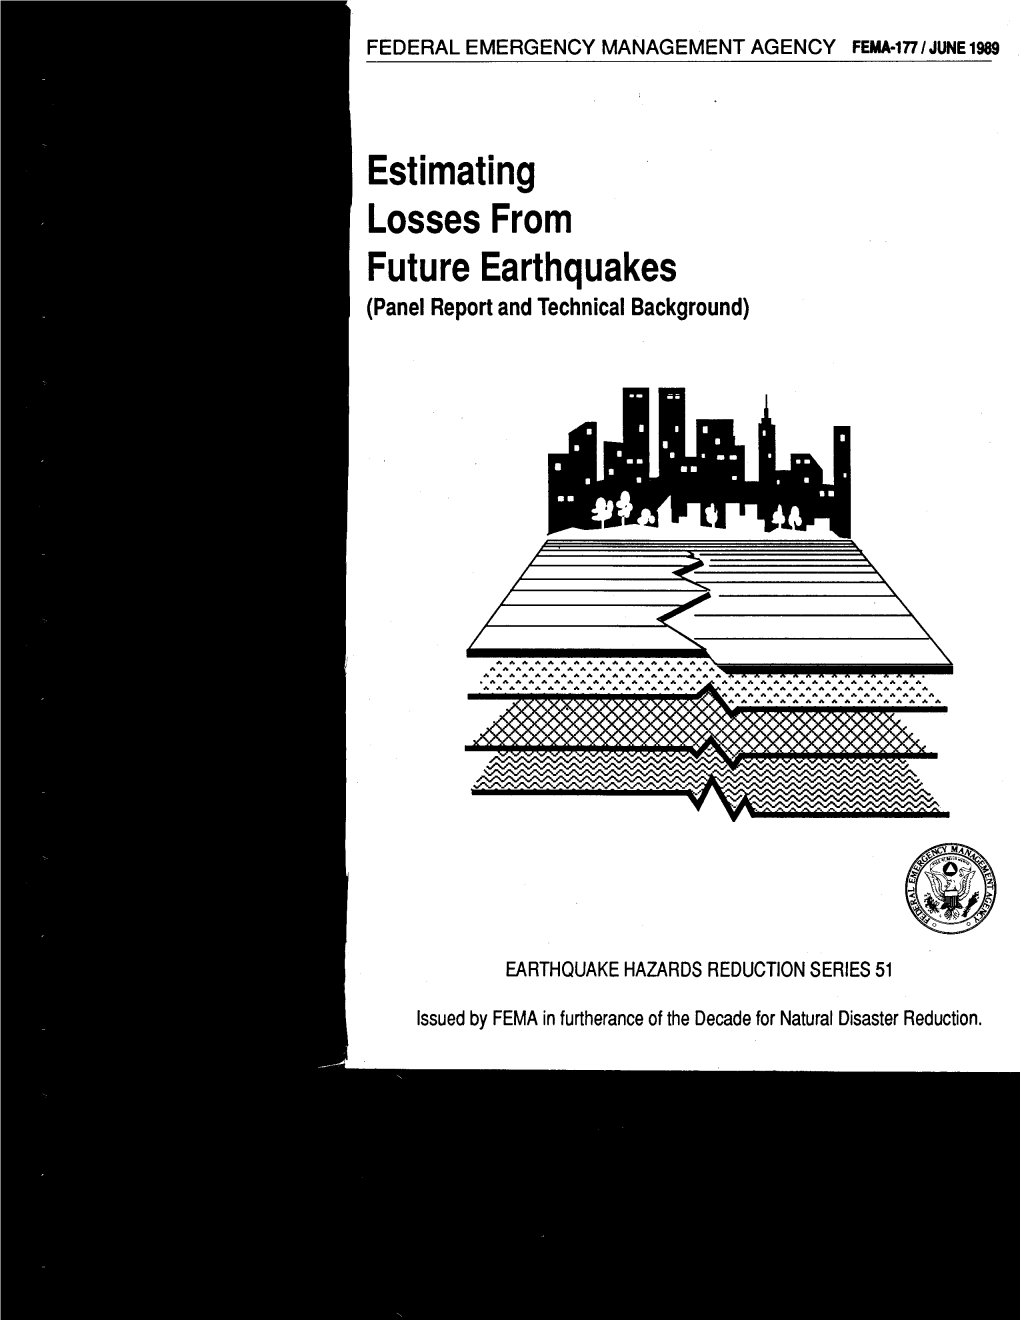 FEMA 177-Estimating Losses from Future Earthquakes (Panel Report